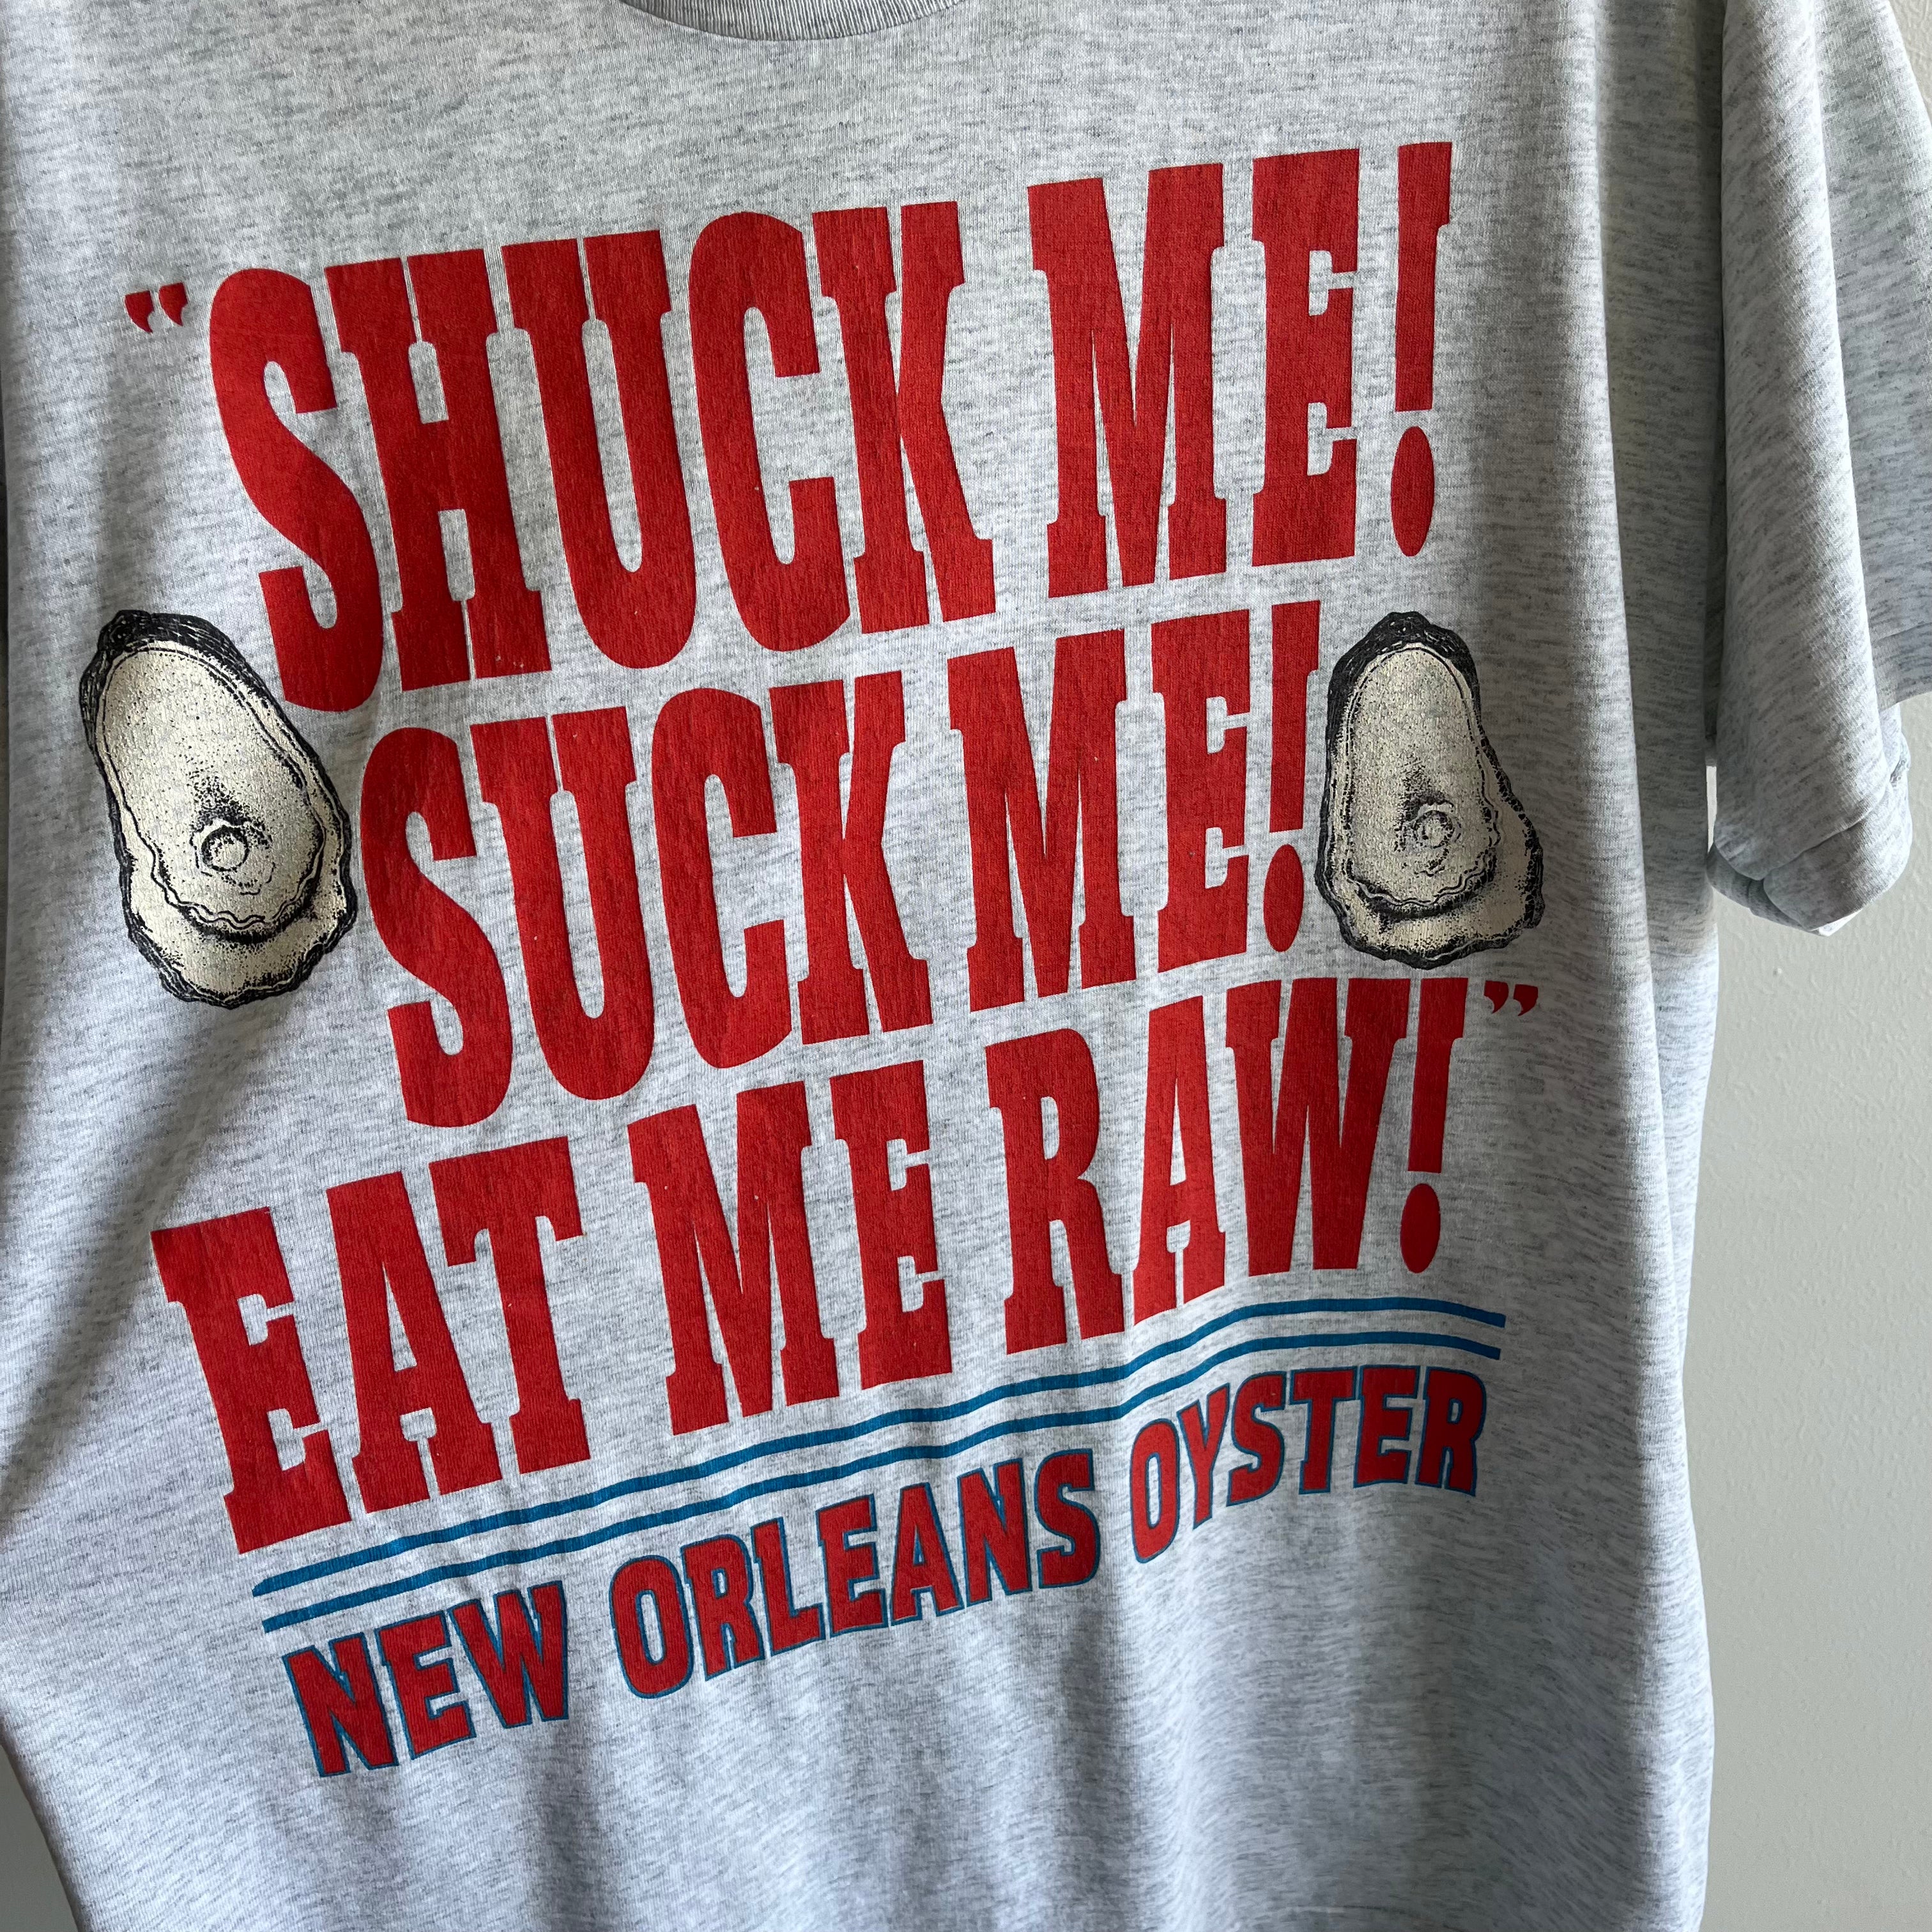 1980s Shuck Me, Etc - New Orleans T-SHirt by FOTL Best